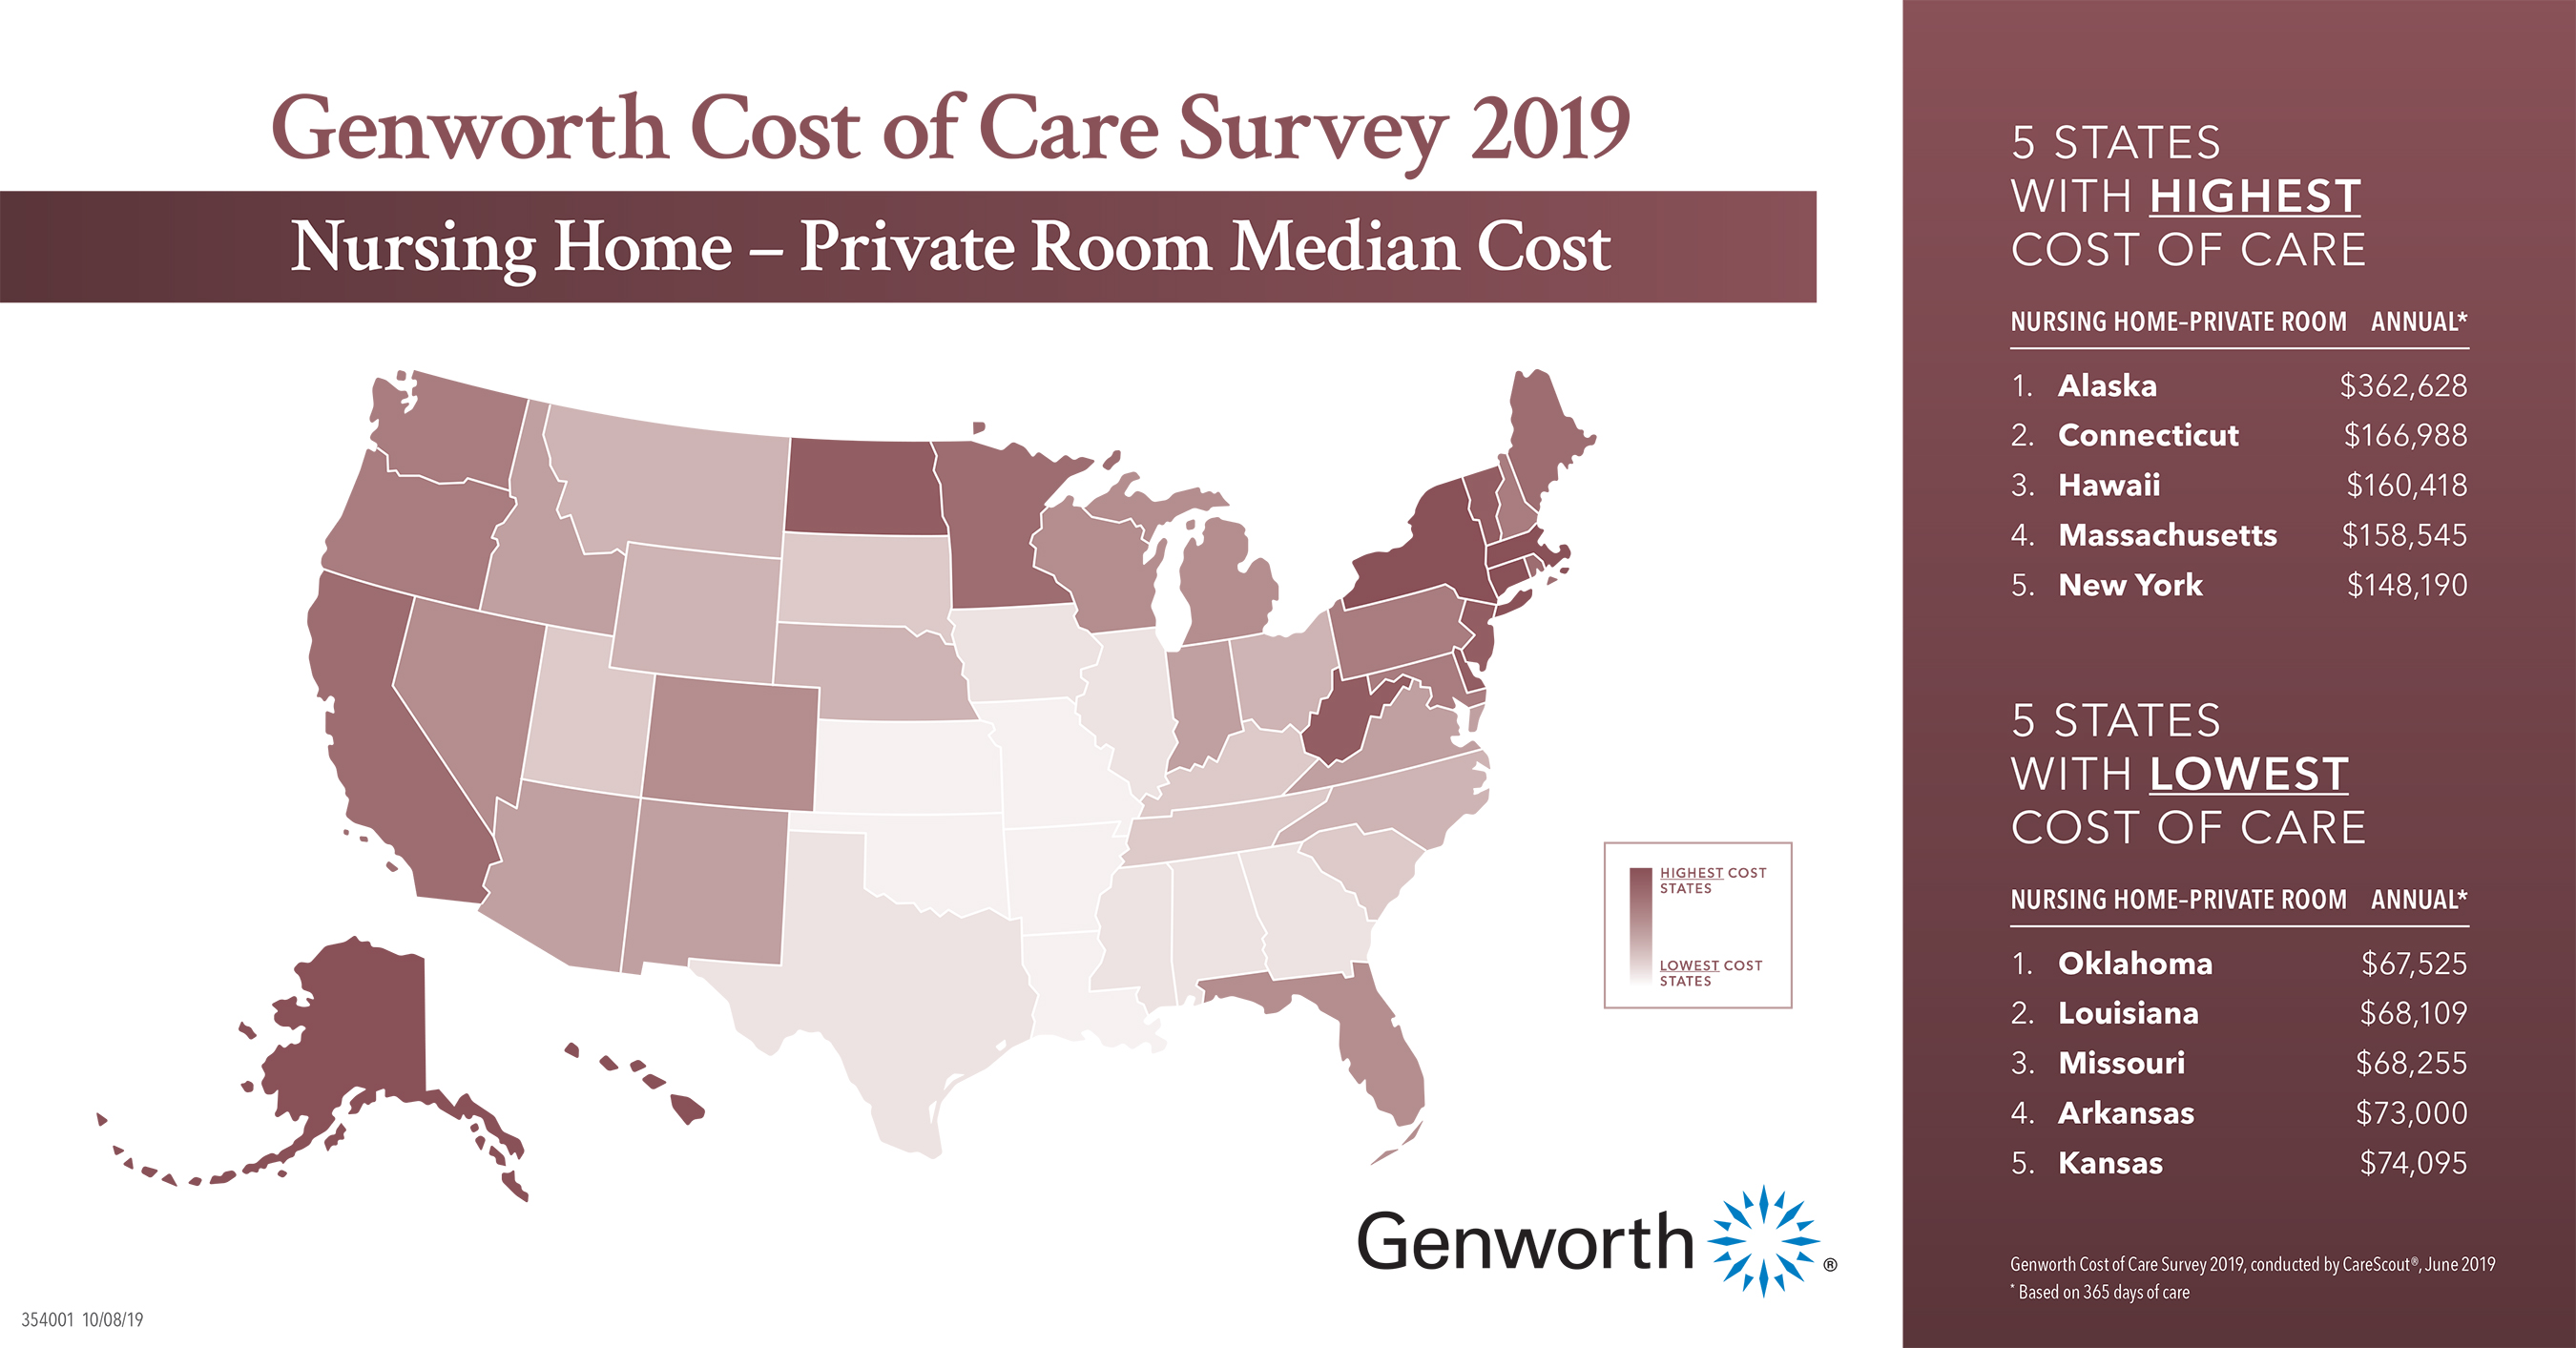 Nursing Home - Private Room Median Cost